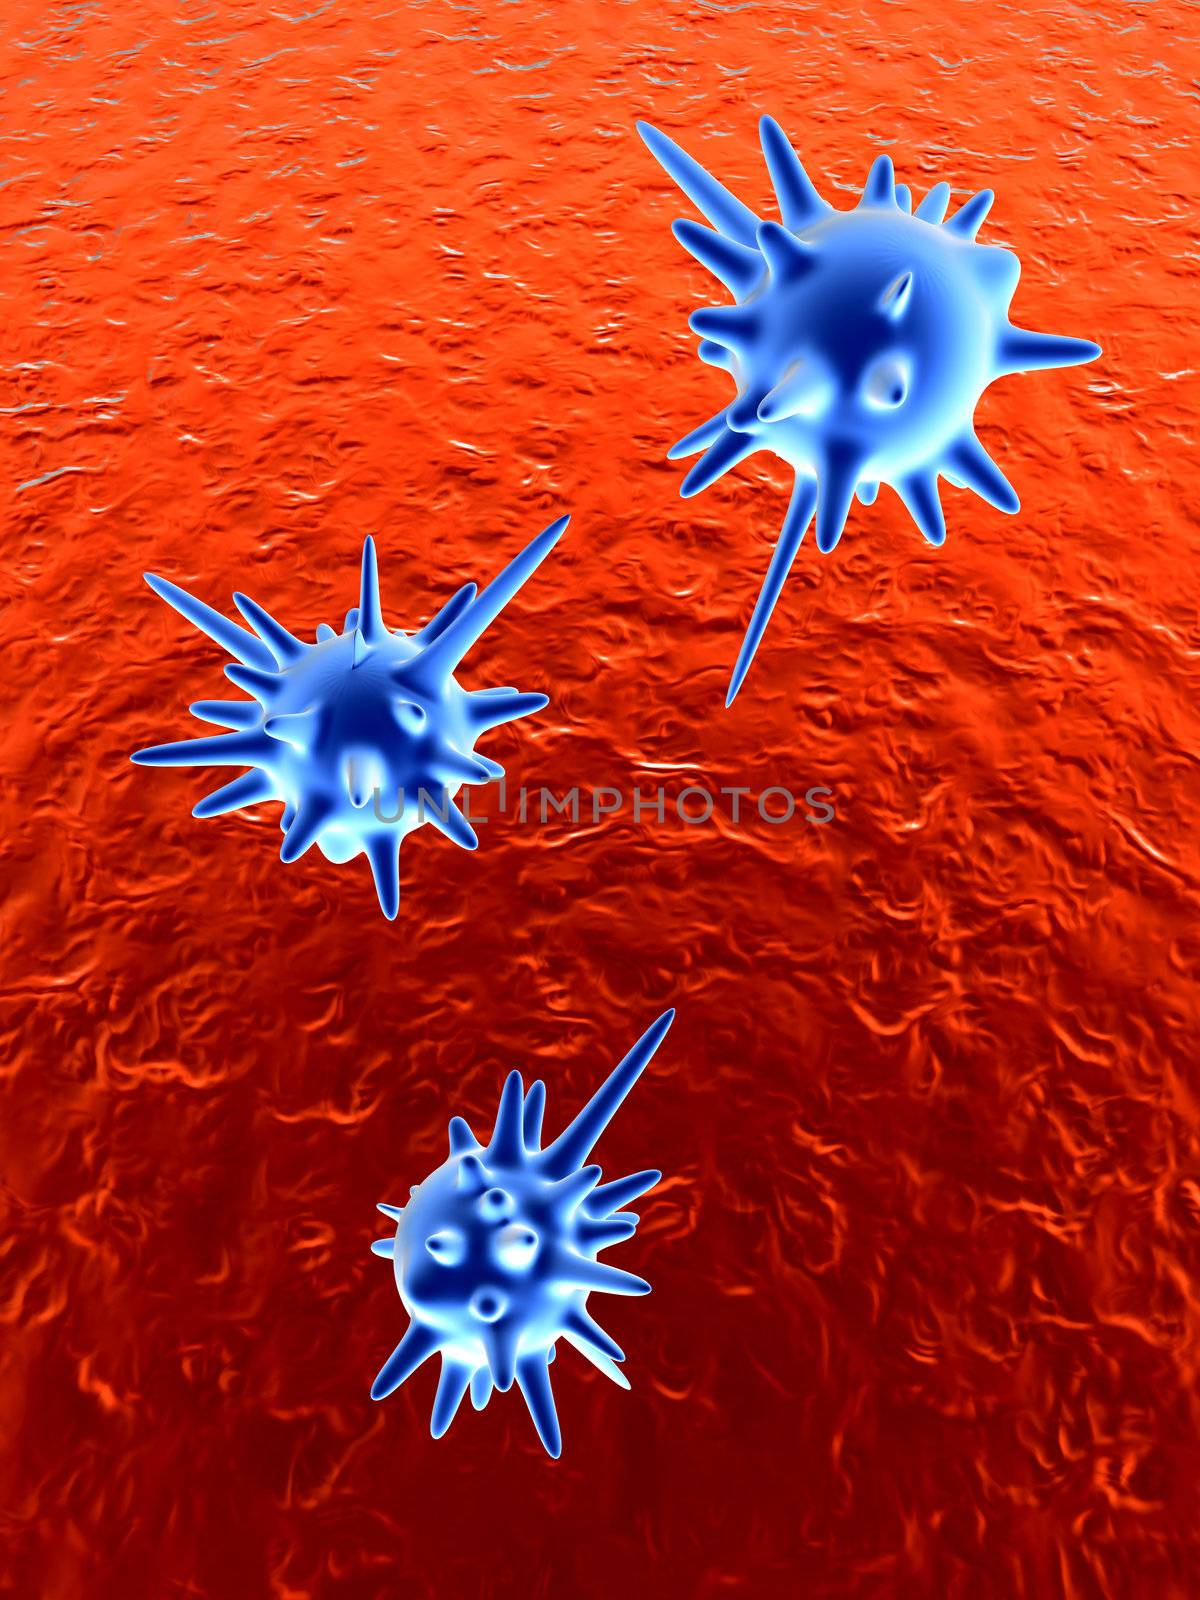 High resolution 3D render of Viruses in a bloodstream.